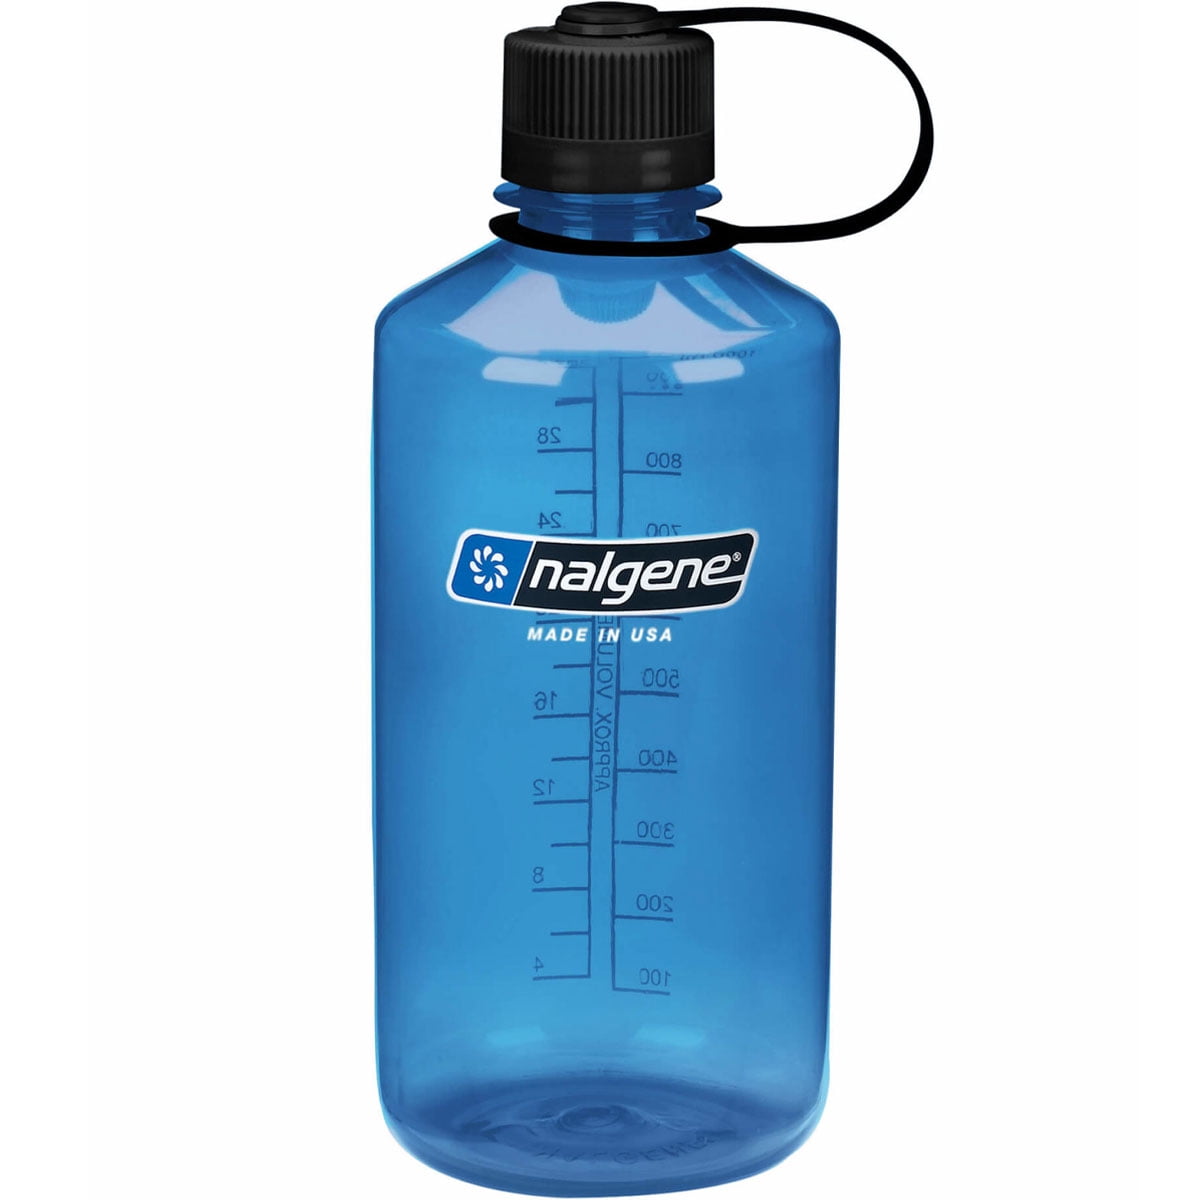 Nalgene Narrow Mouth Tritan Water Bottle, Trout Green, 32 oz